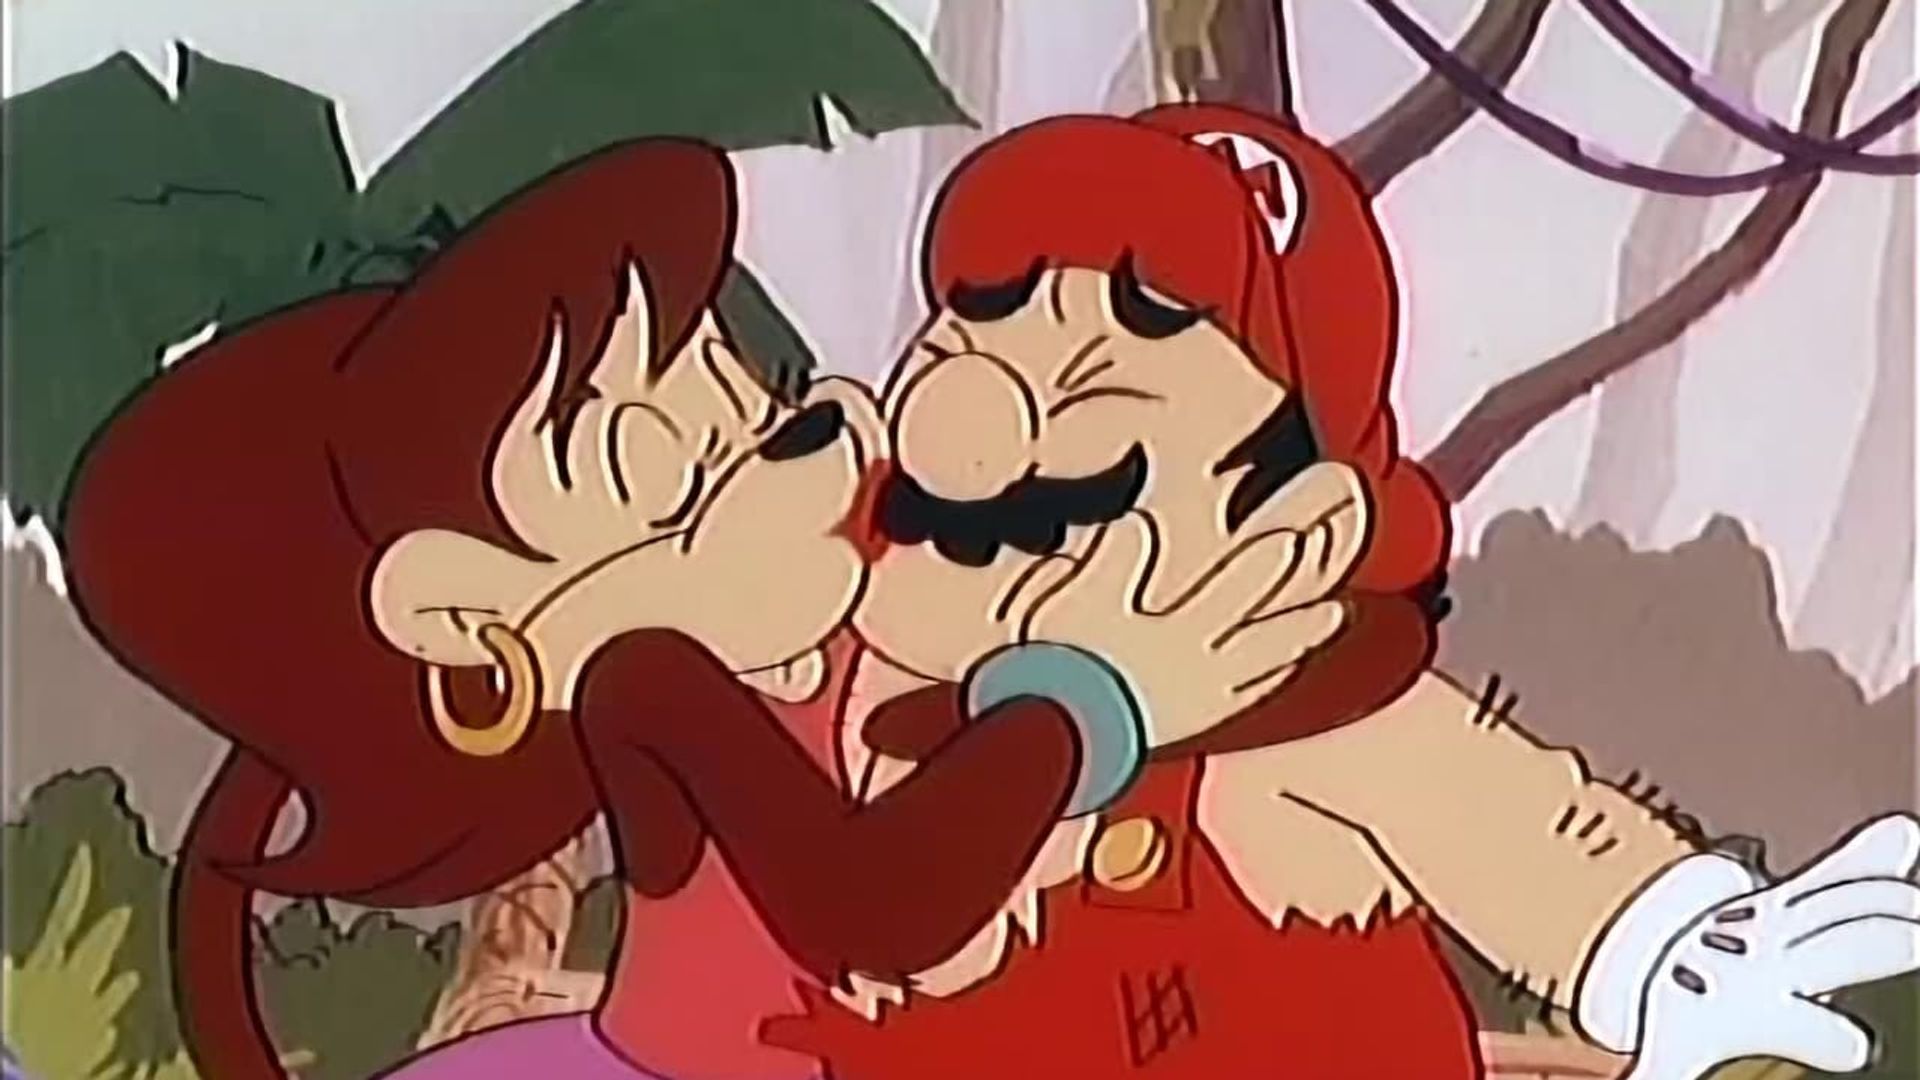 The Super Mario Bros. Super Show! background